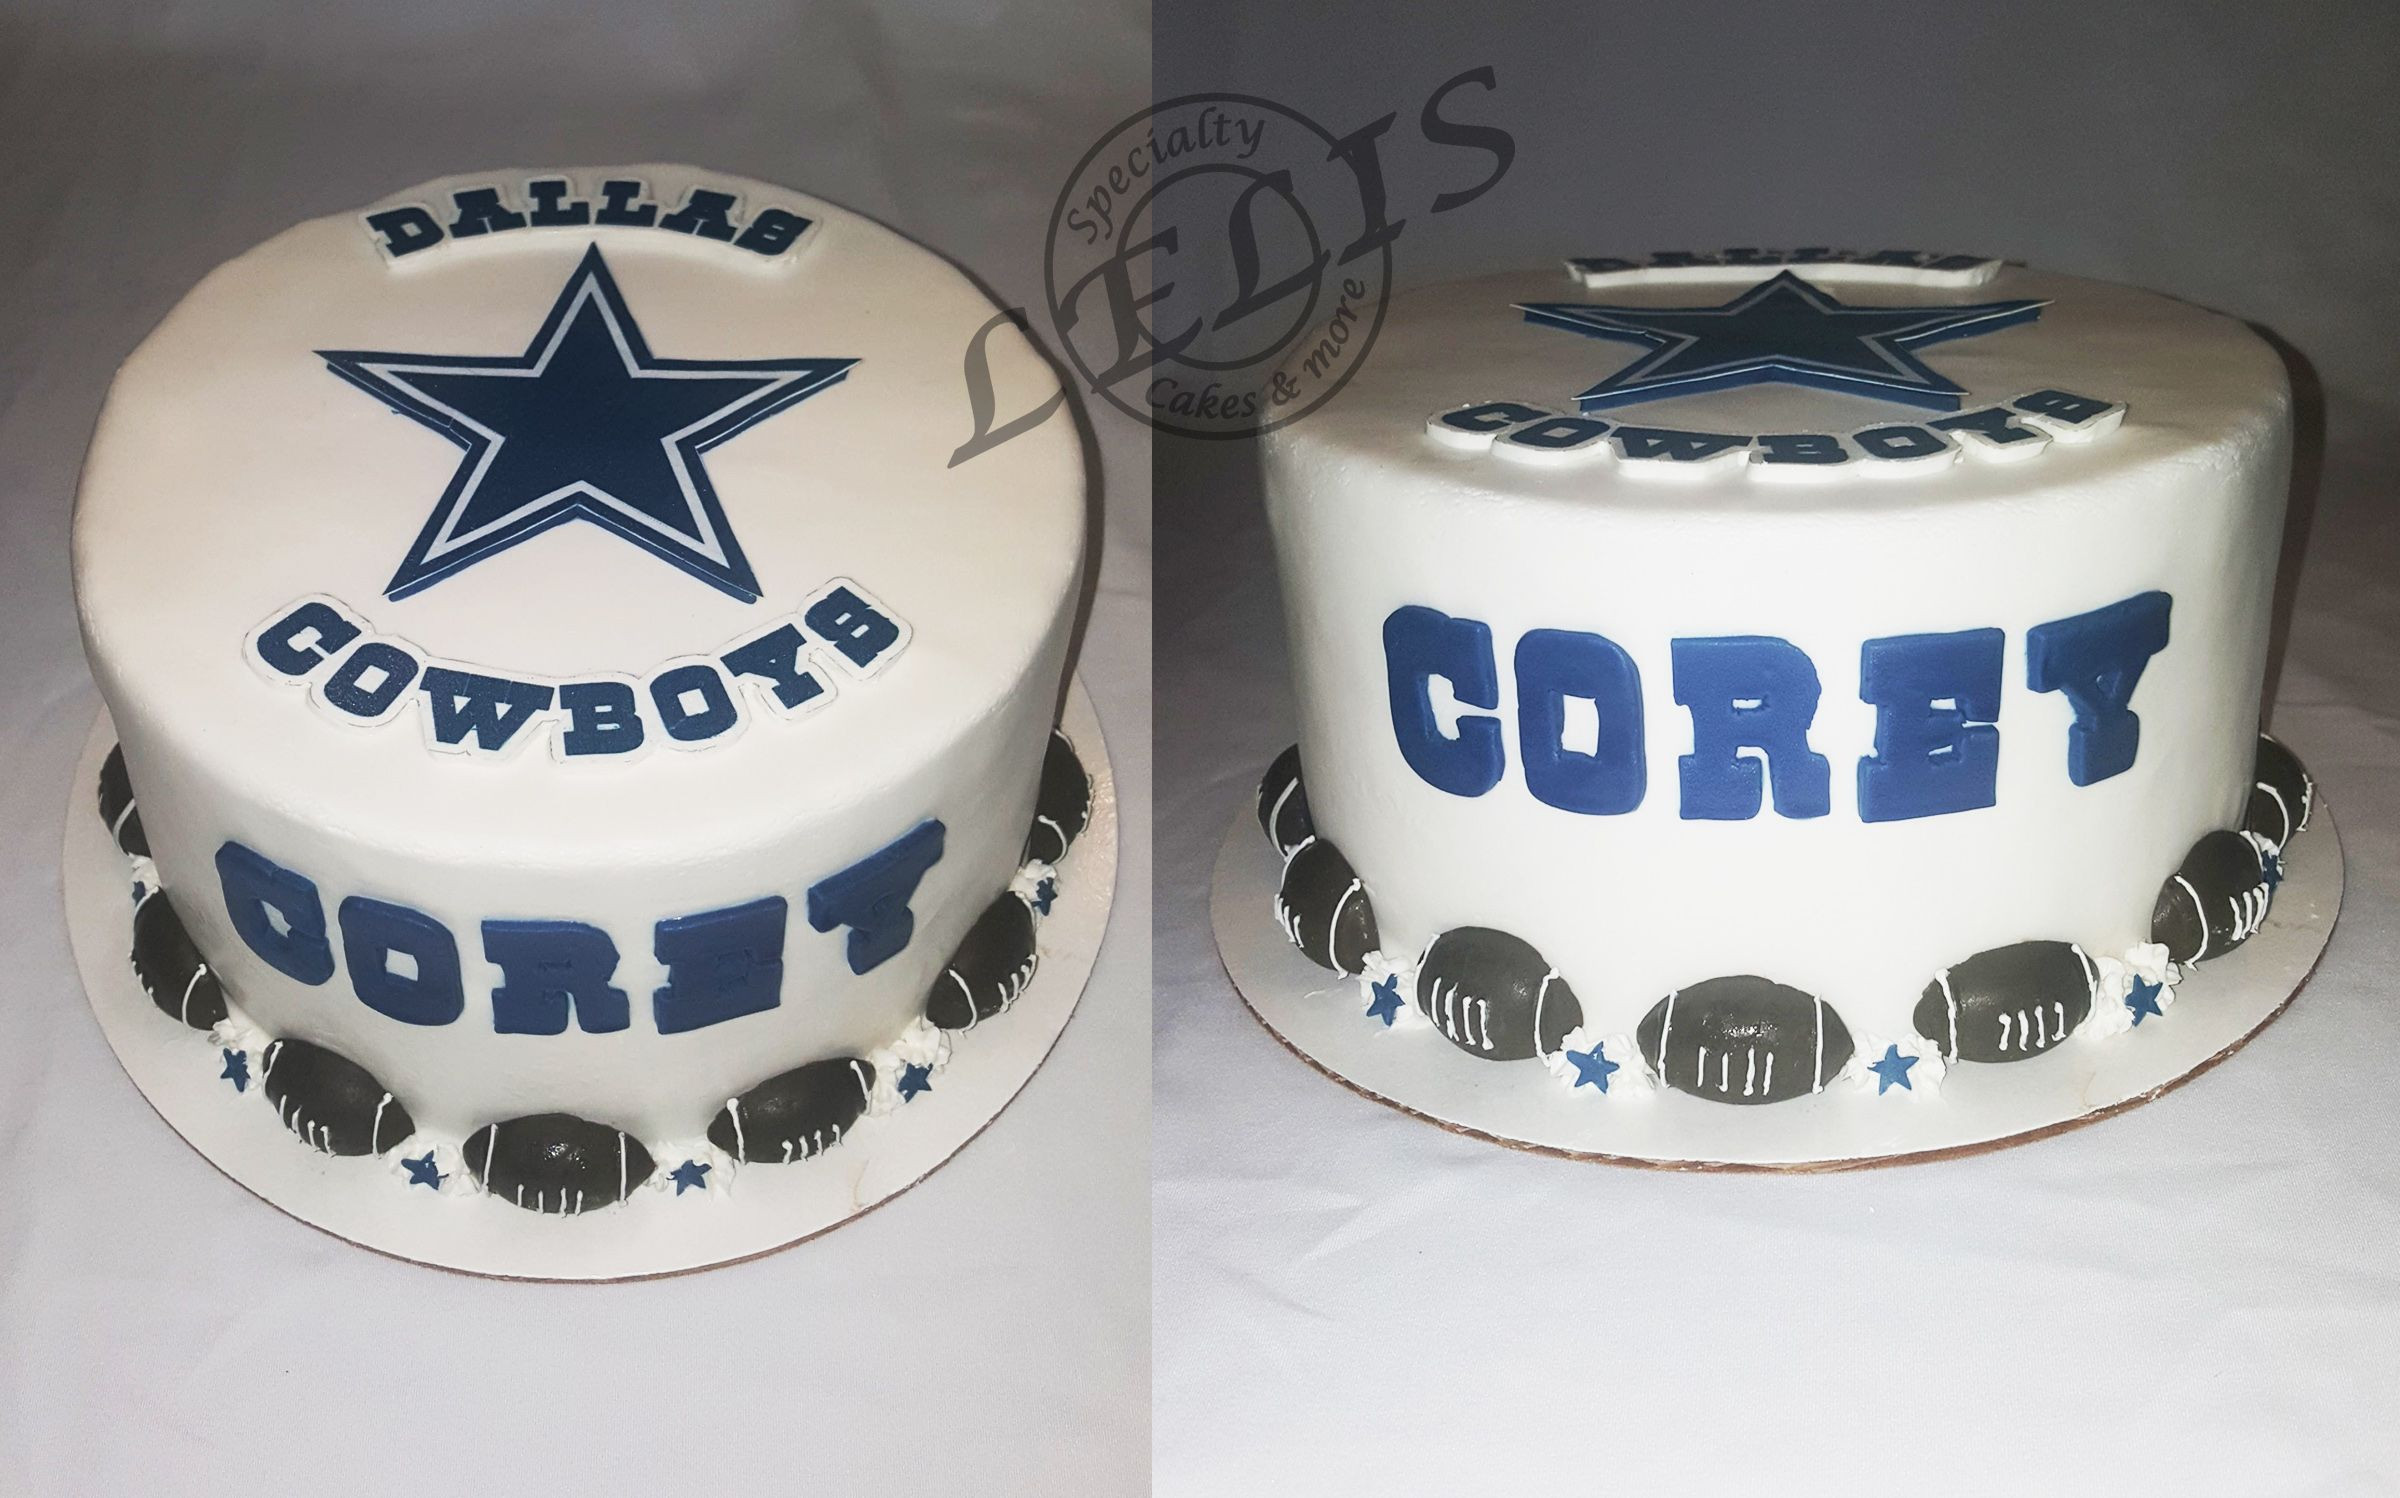 Dallas Cowboys Birthday Cakes
 Dallas cowboys birthday cake by Marina Lelis on Lelis